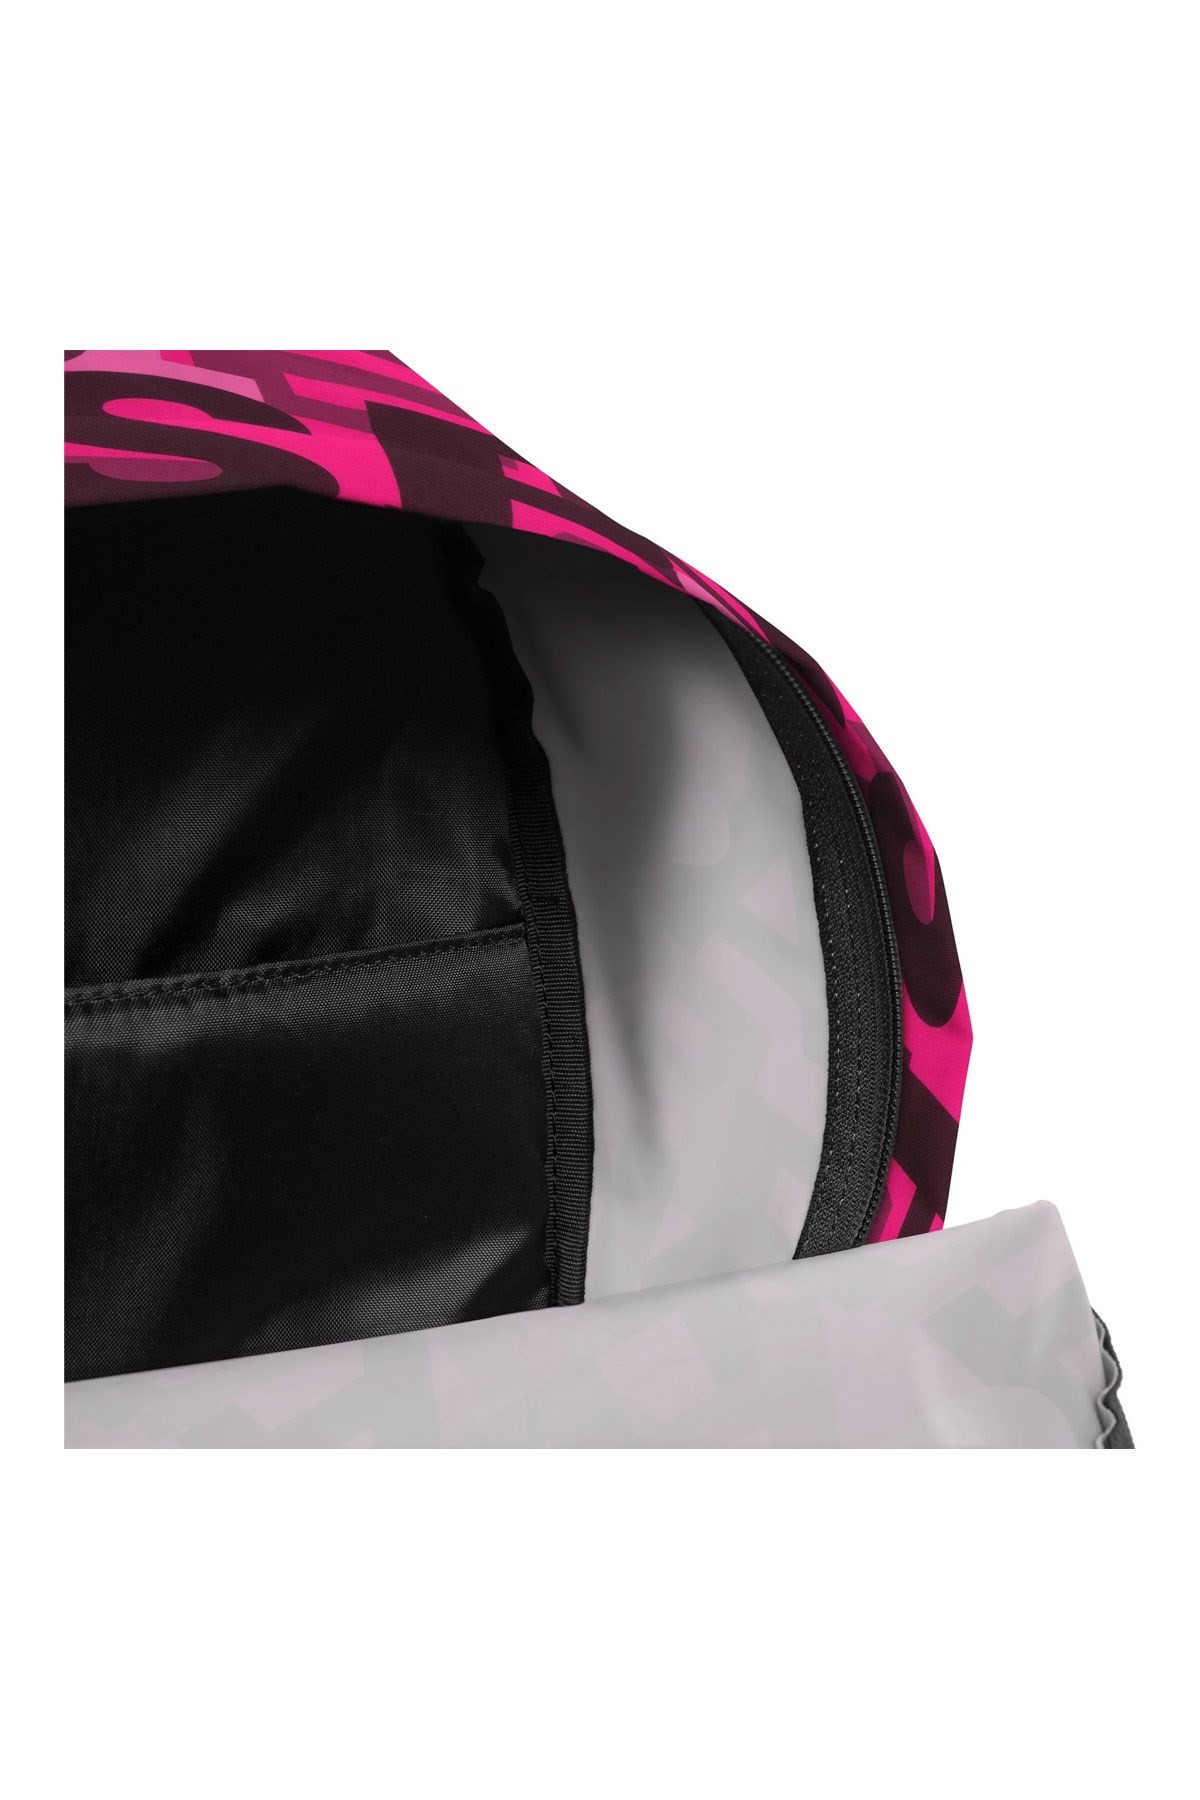 Eastpak Padded Zippl'R + Letter Pink Sırt Çantası Pembe